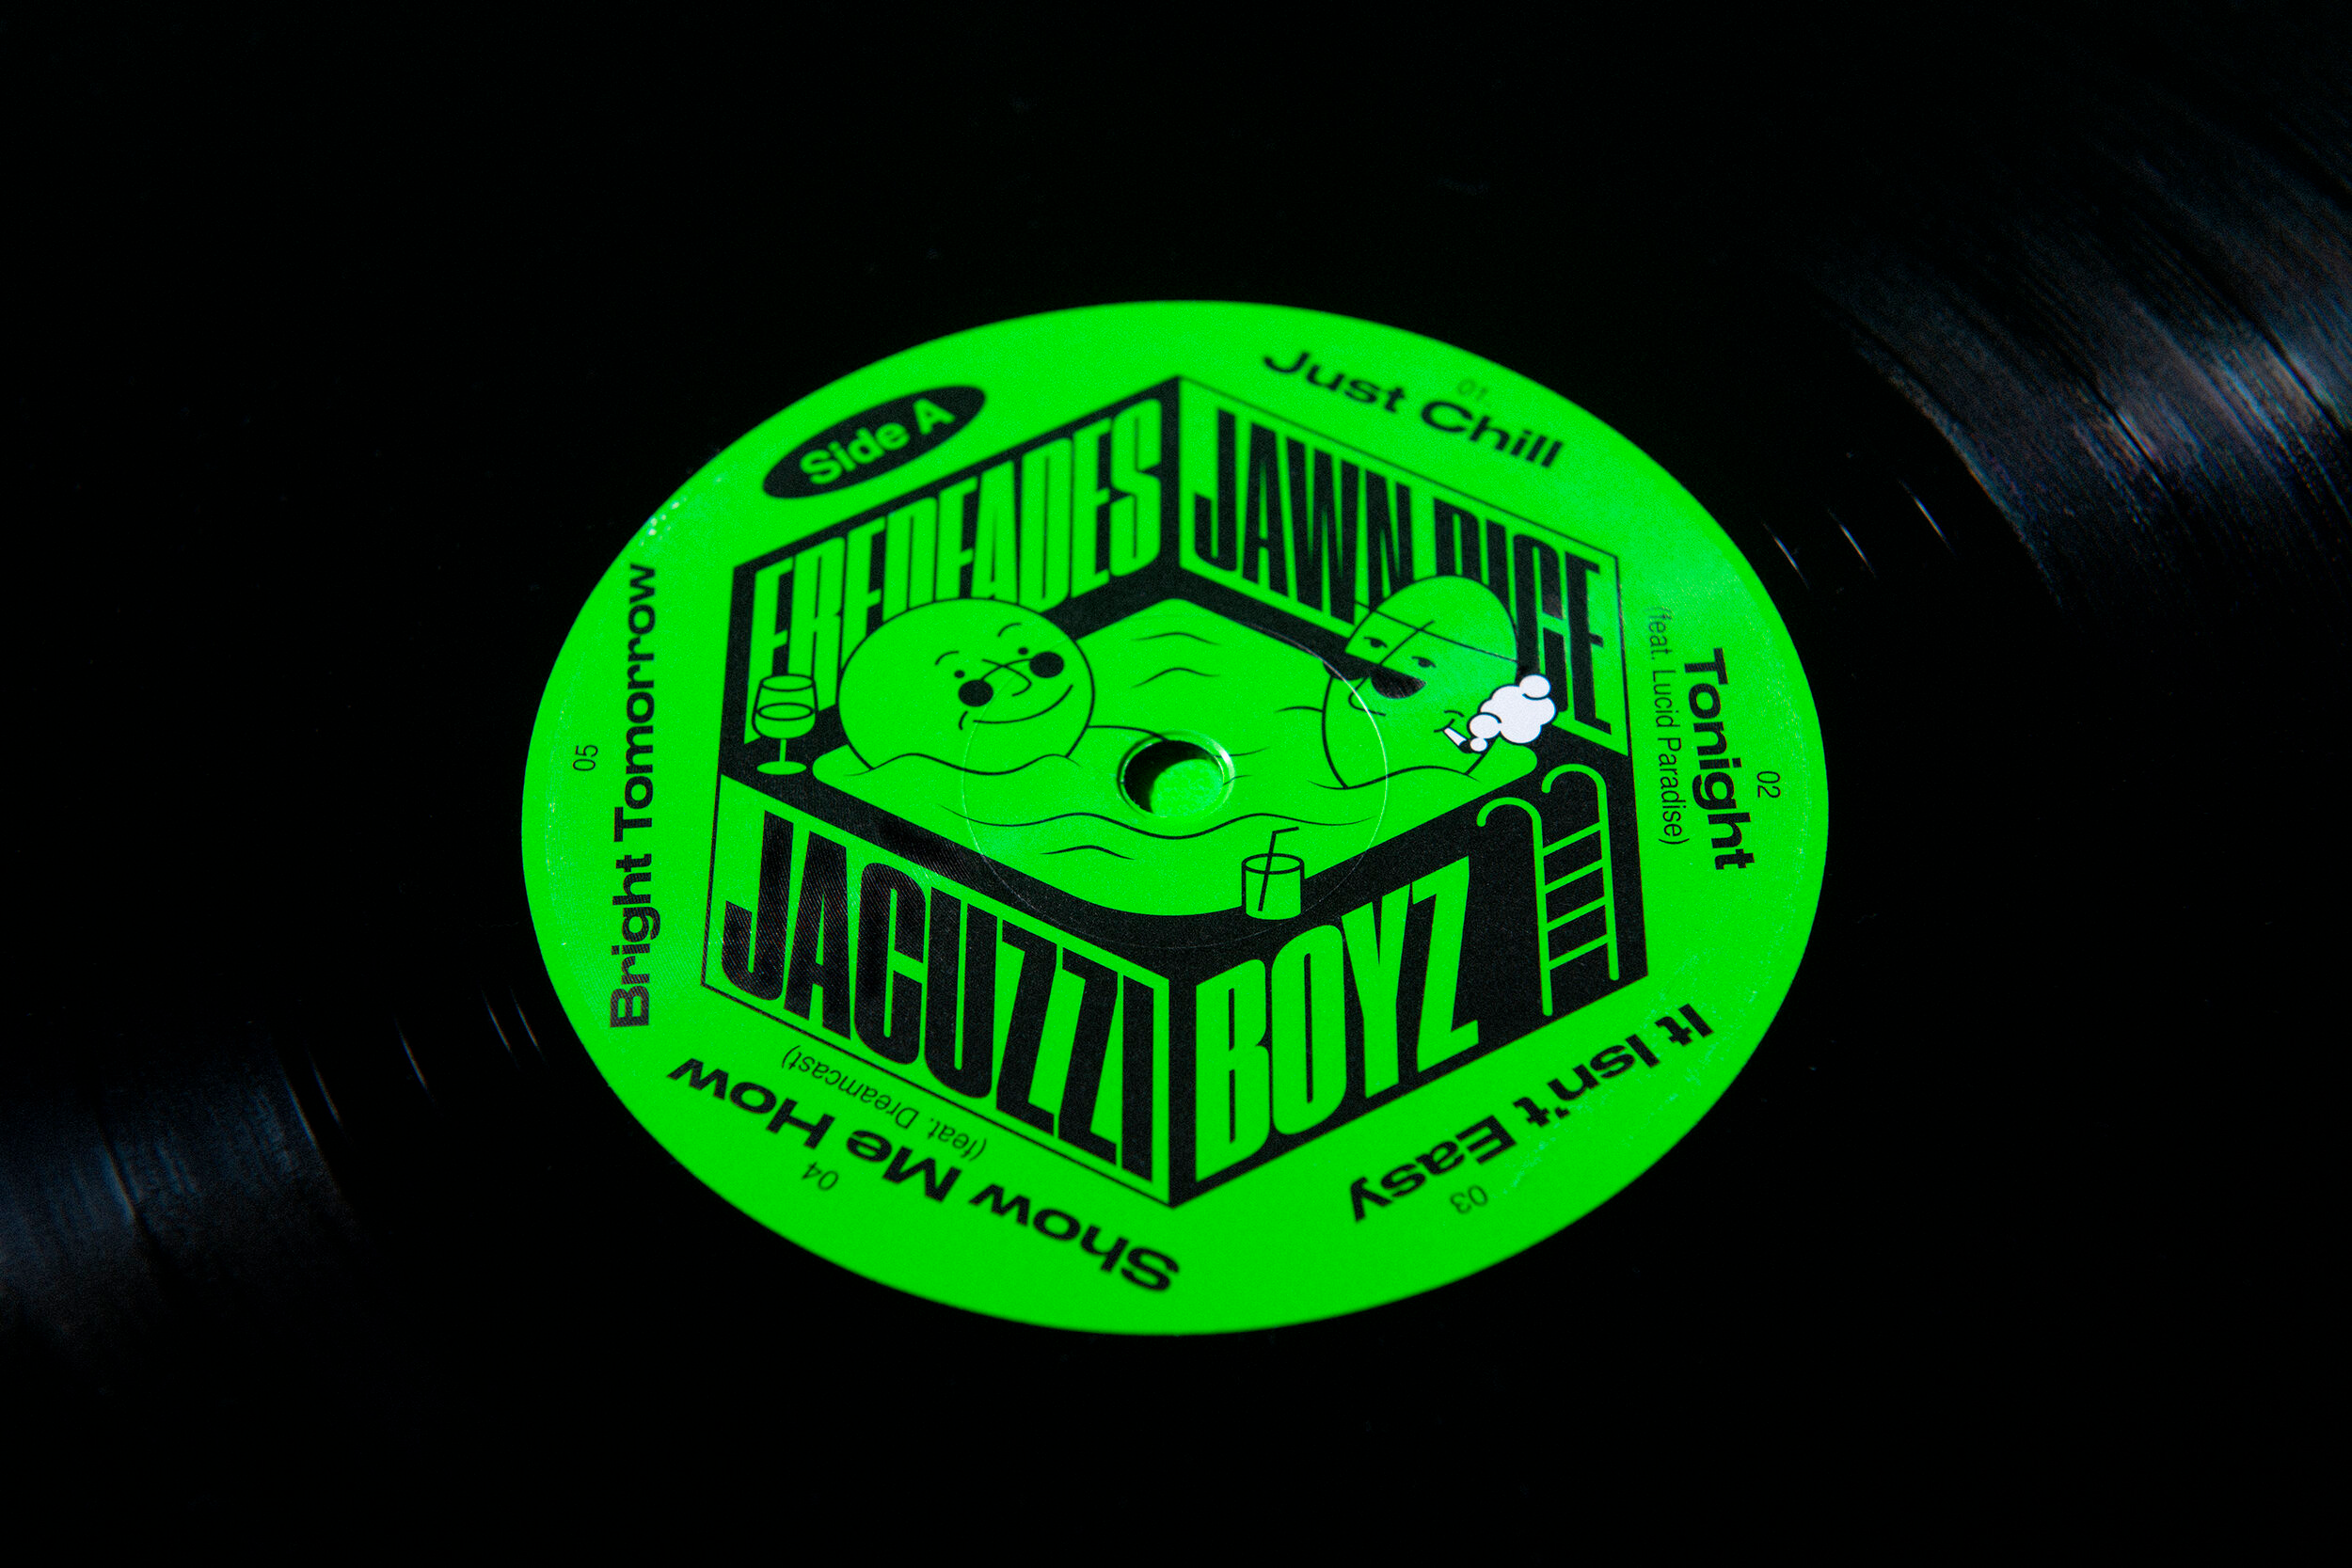 Neon green vinyl center label